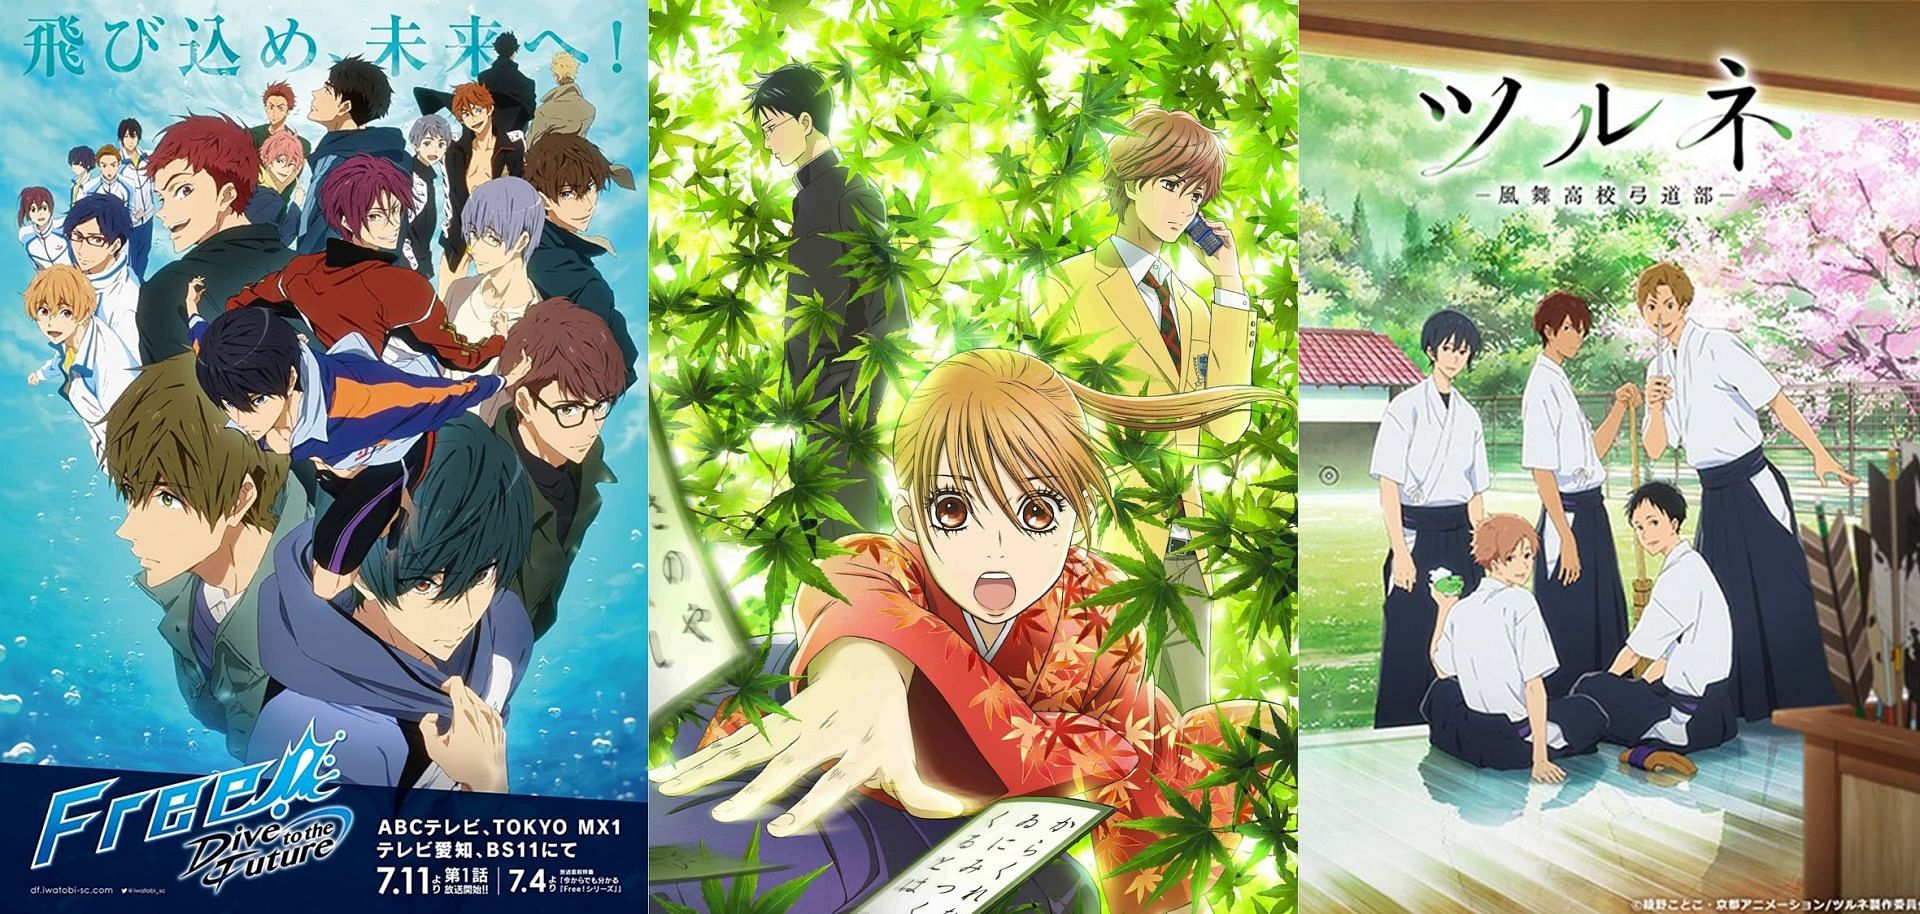 Anime - Latest News & Updates on Anime and Manga Series